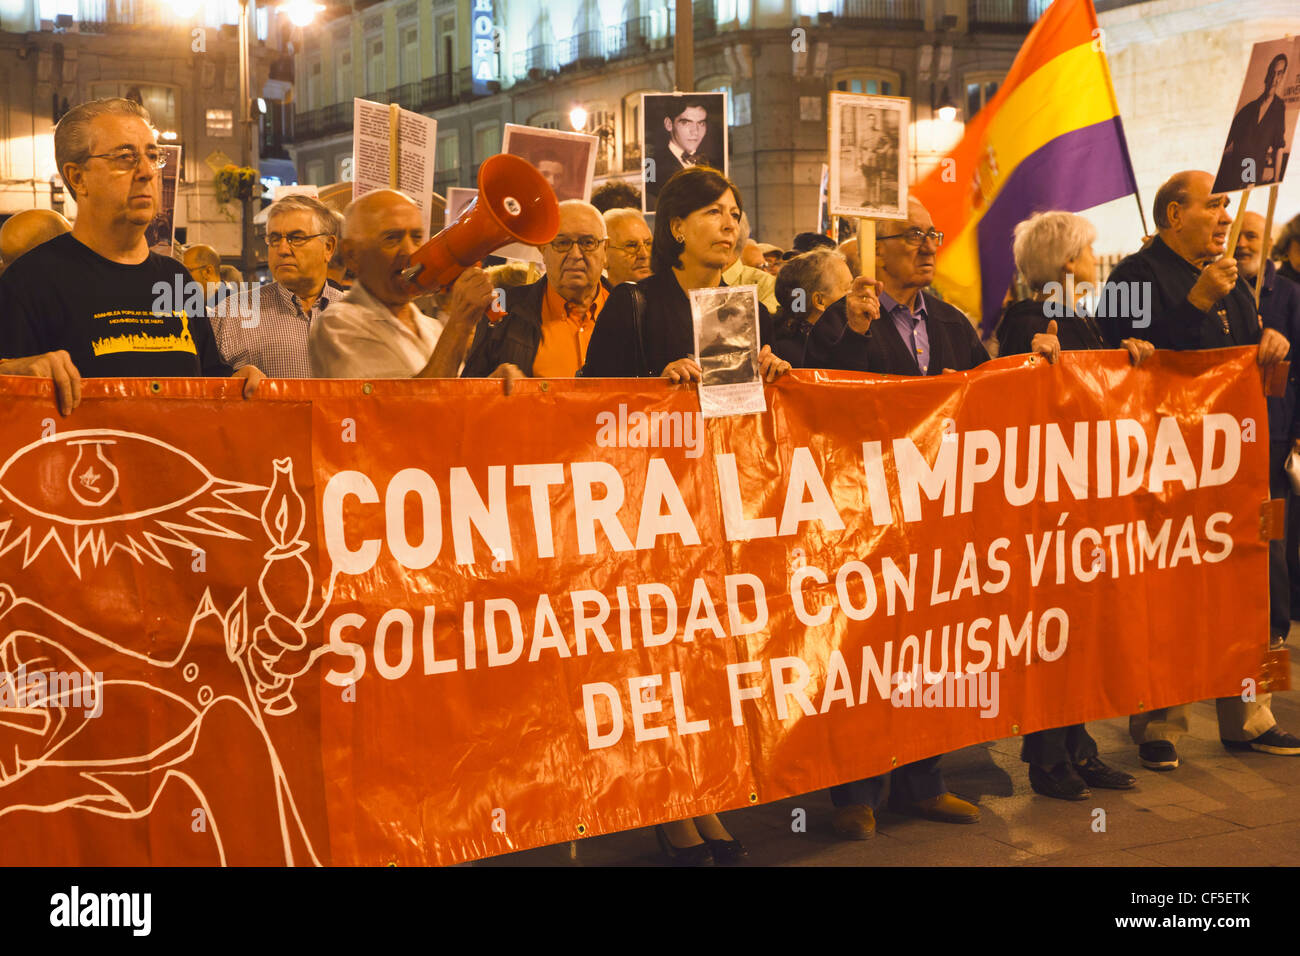 Manifestation Plaza del Sol de Madrid. La solidarité avec les victimes du franquisme. Banque D'Images